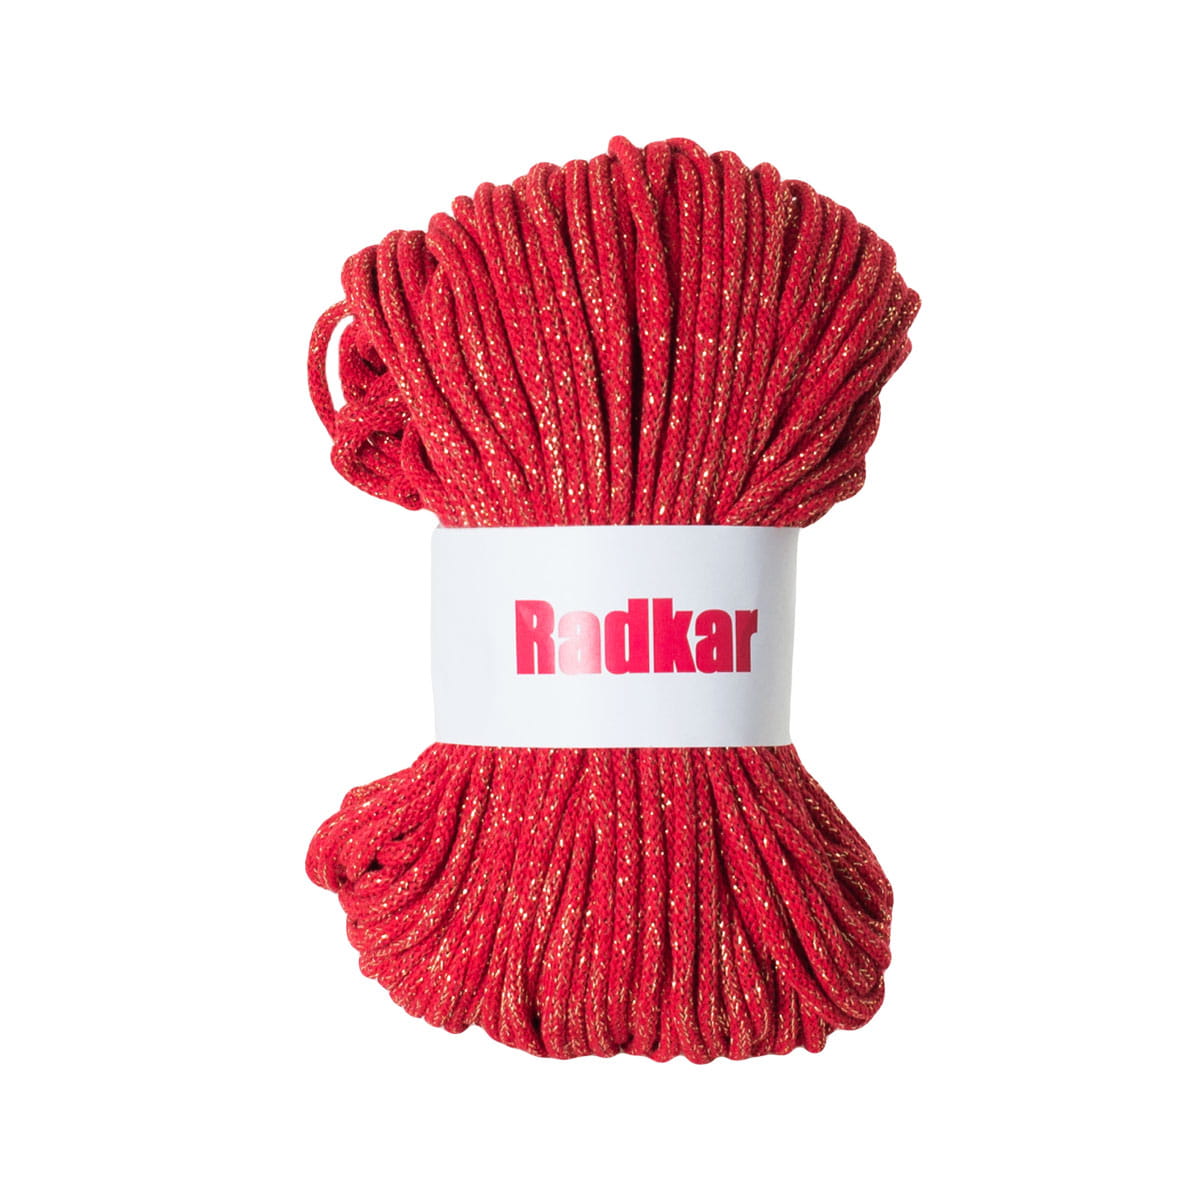 Red & gold thread Premium braided cotton cord 5mm